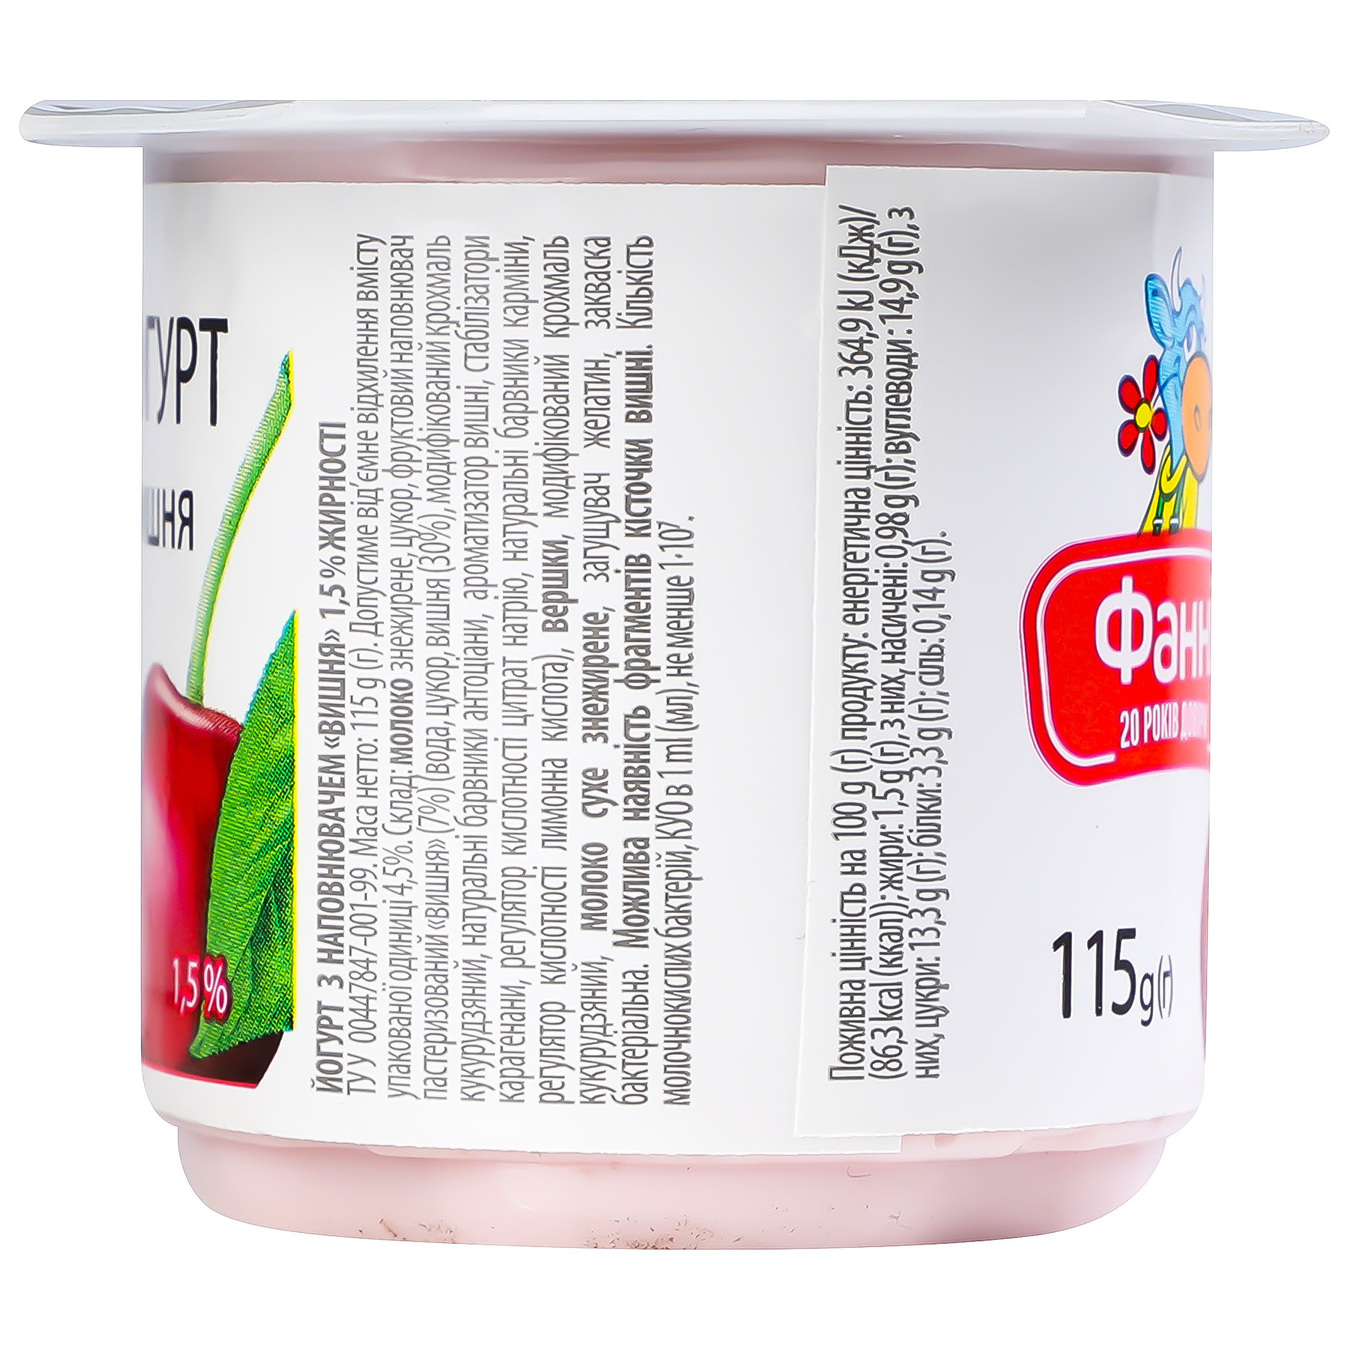 Йогурт Фанни с наполнителем вишня стаканчик 1,5% 115г 4